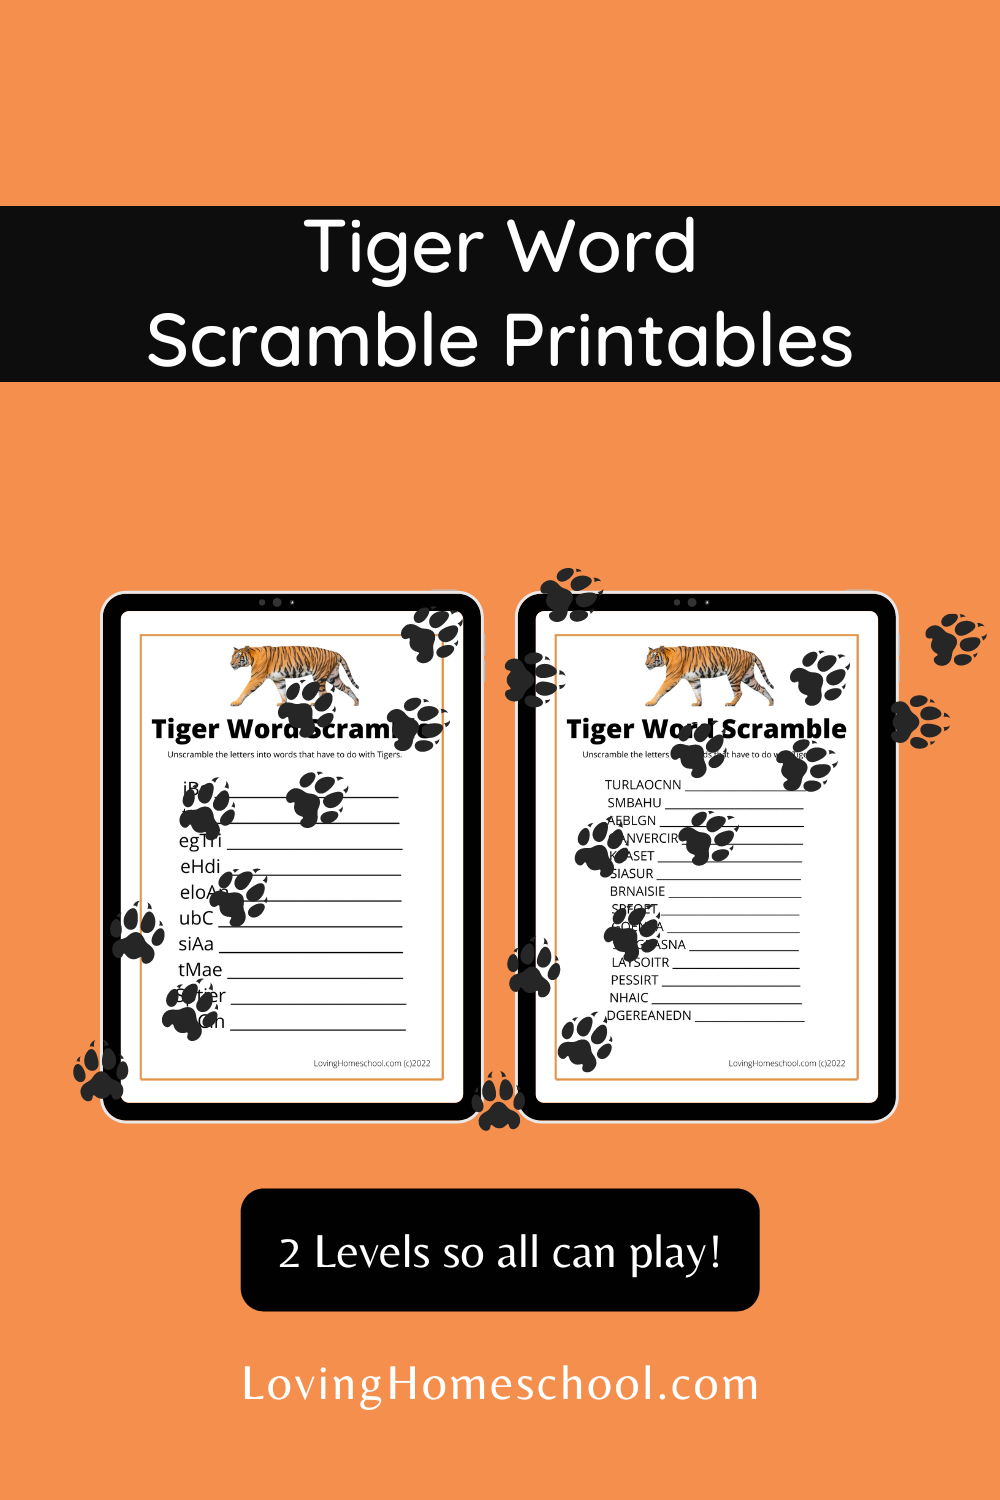 Tiger Word Scramble Printables Pinterest Pin